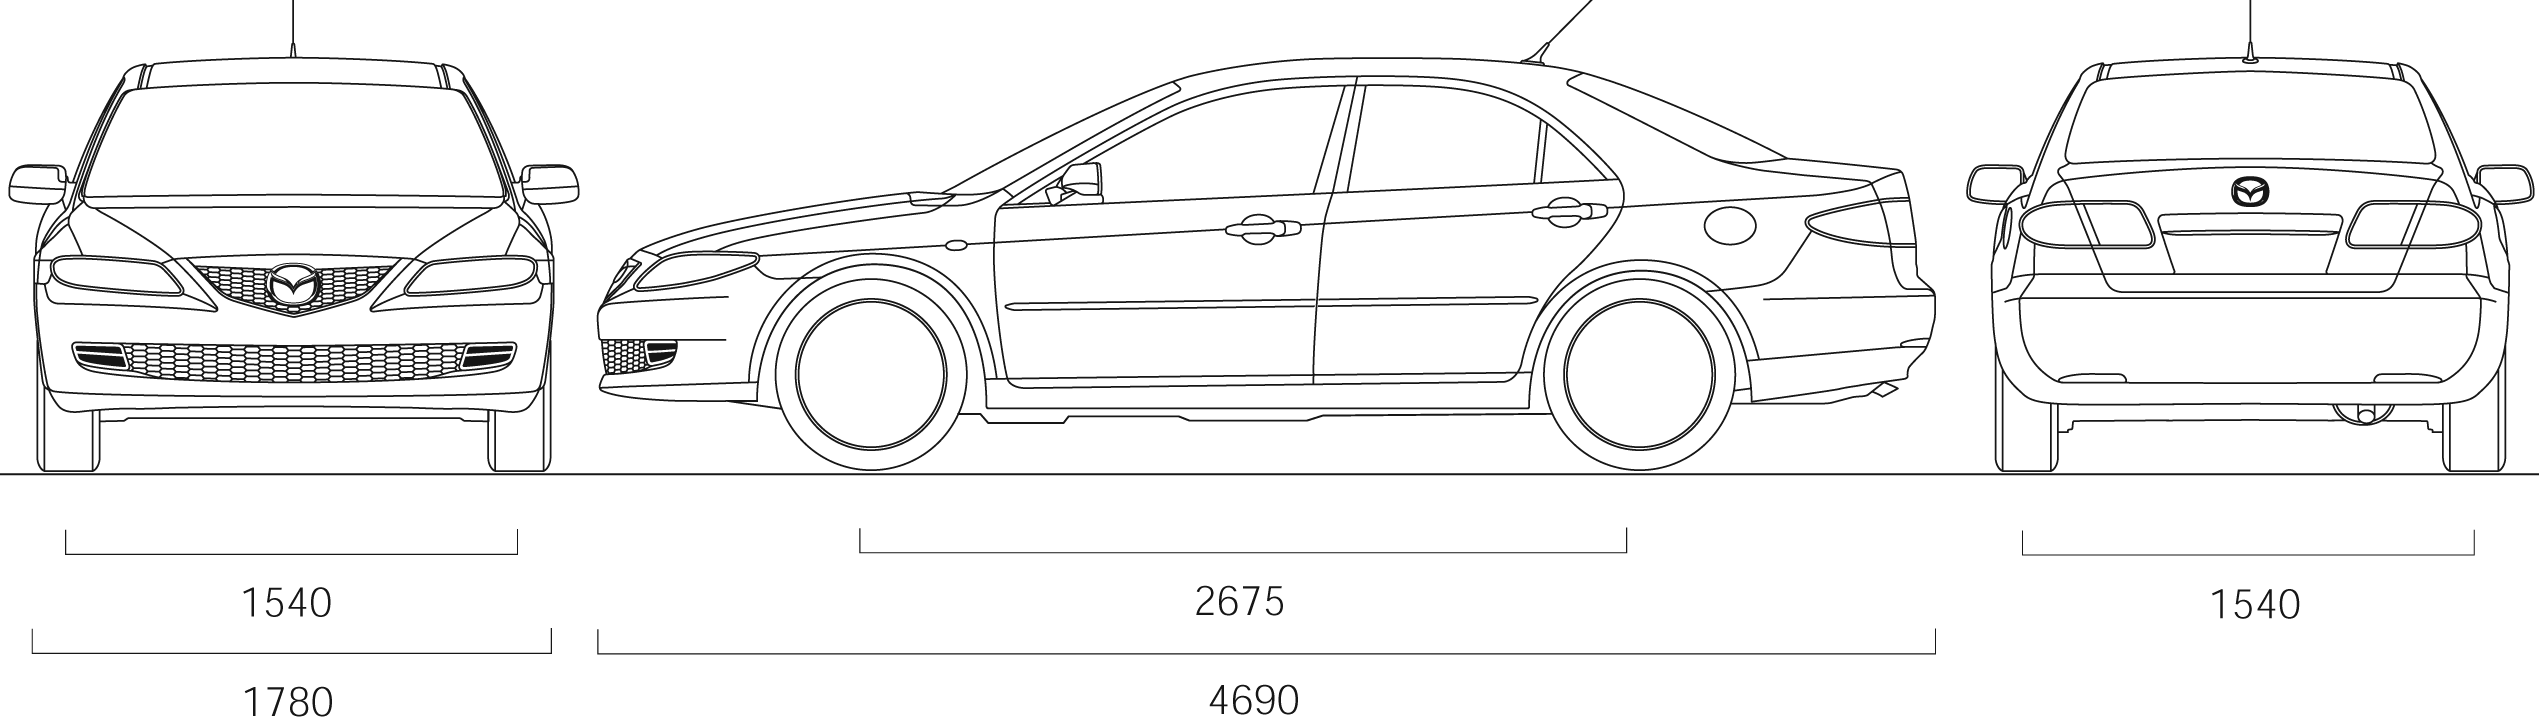 2007 Mazda 6 Sedan v3 blueprints free - Outlines